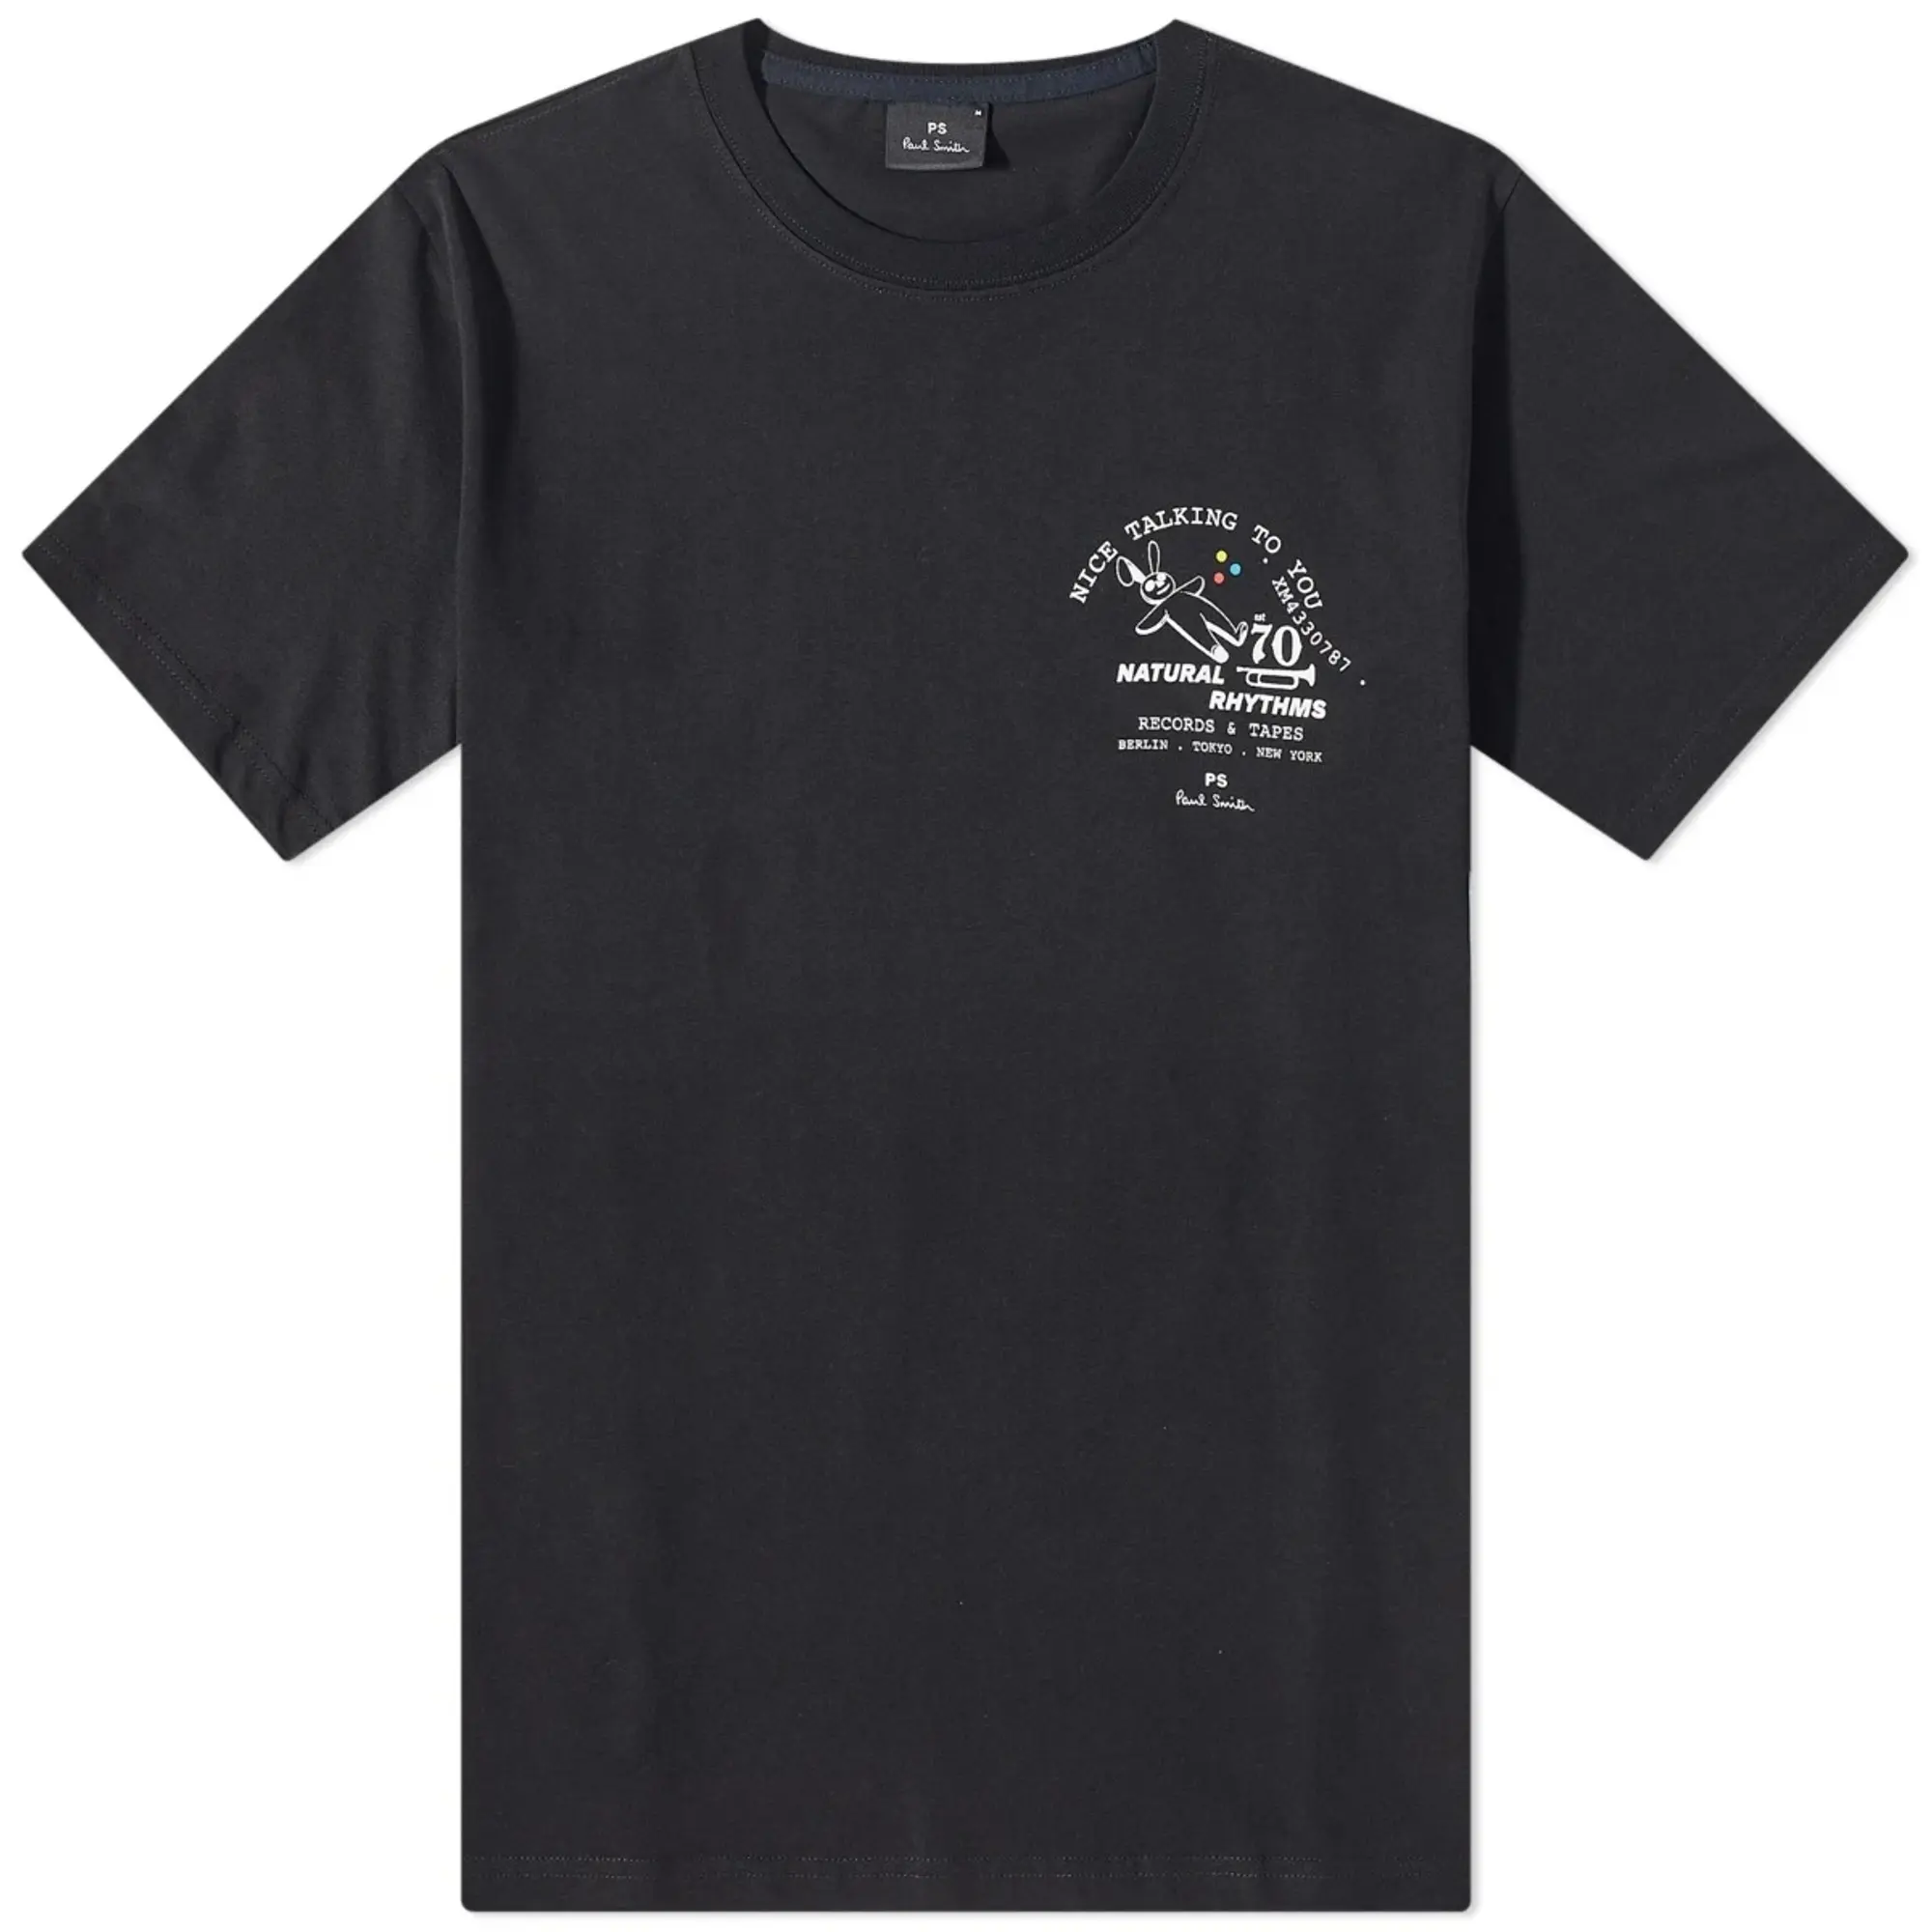 Paul Smith Men's Natural Rhythms T-Shirt Black